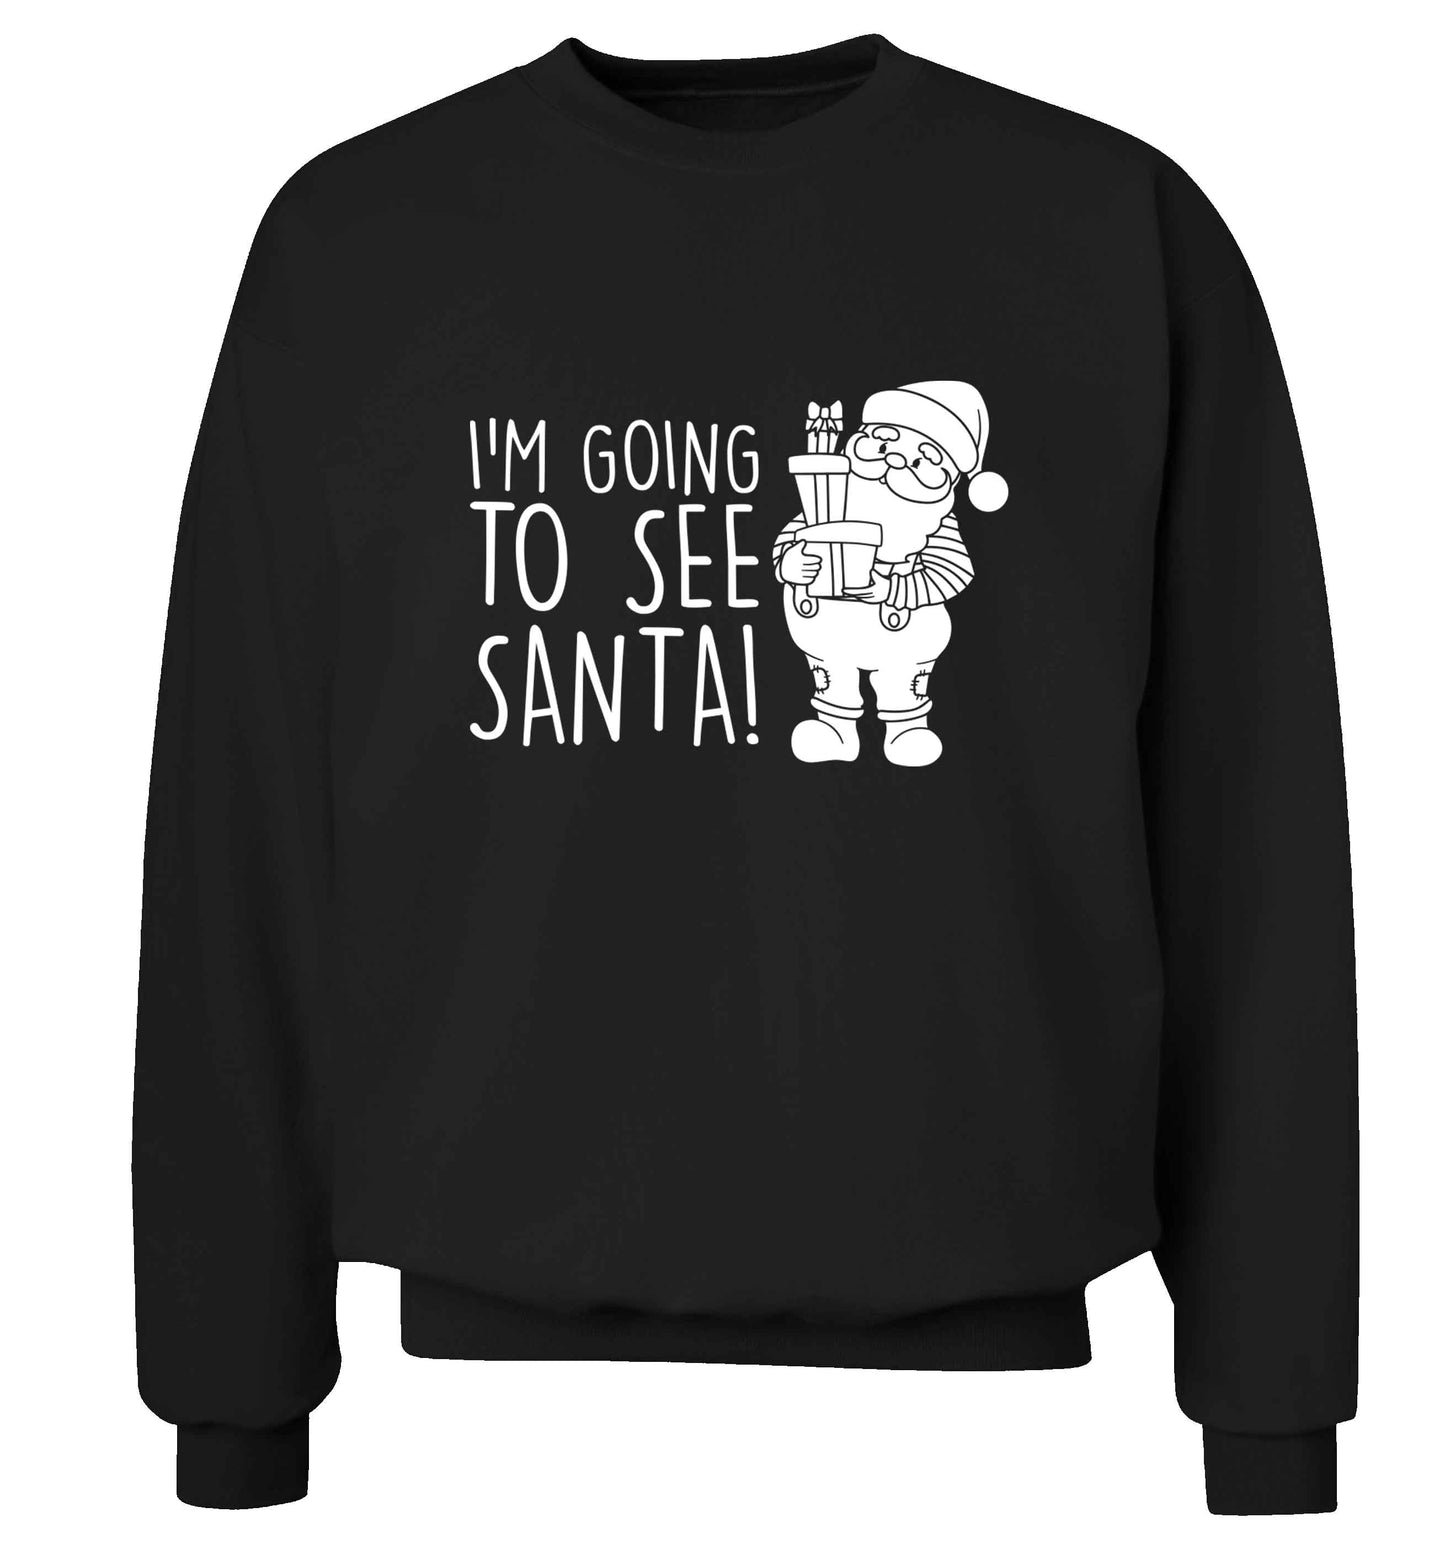 Merry Christmas adult's unisex black sweater 2XL